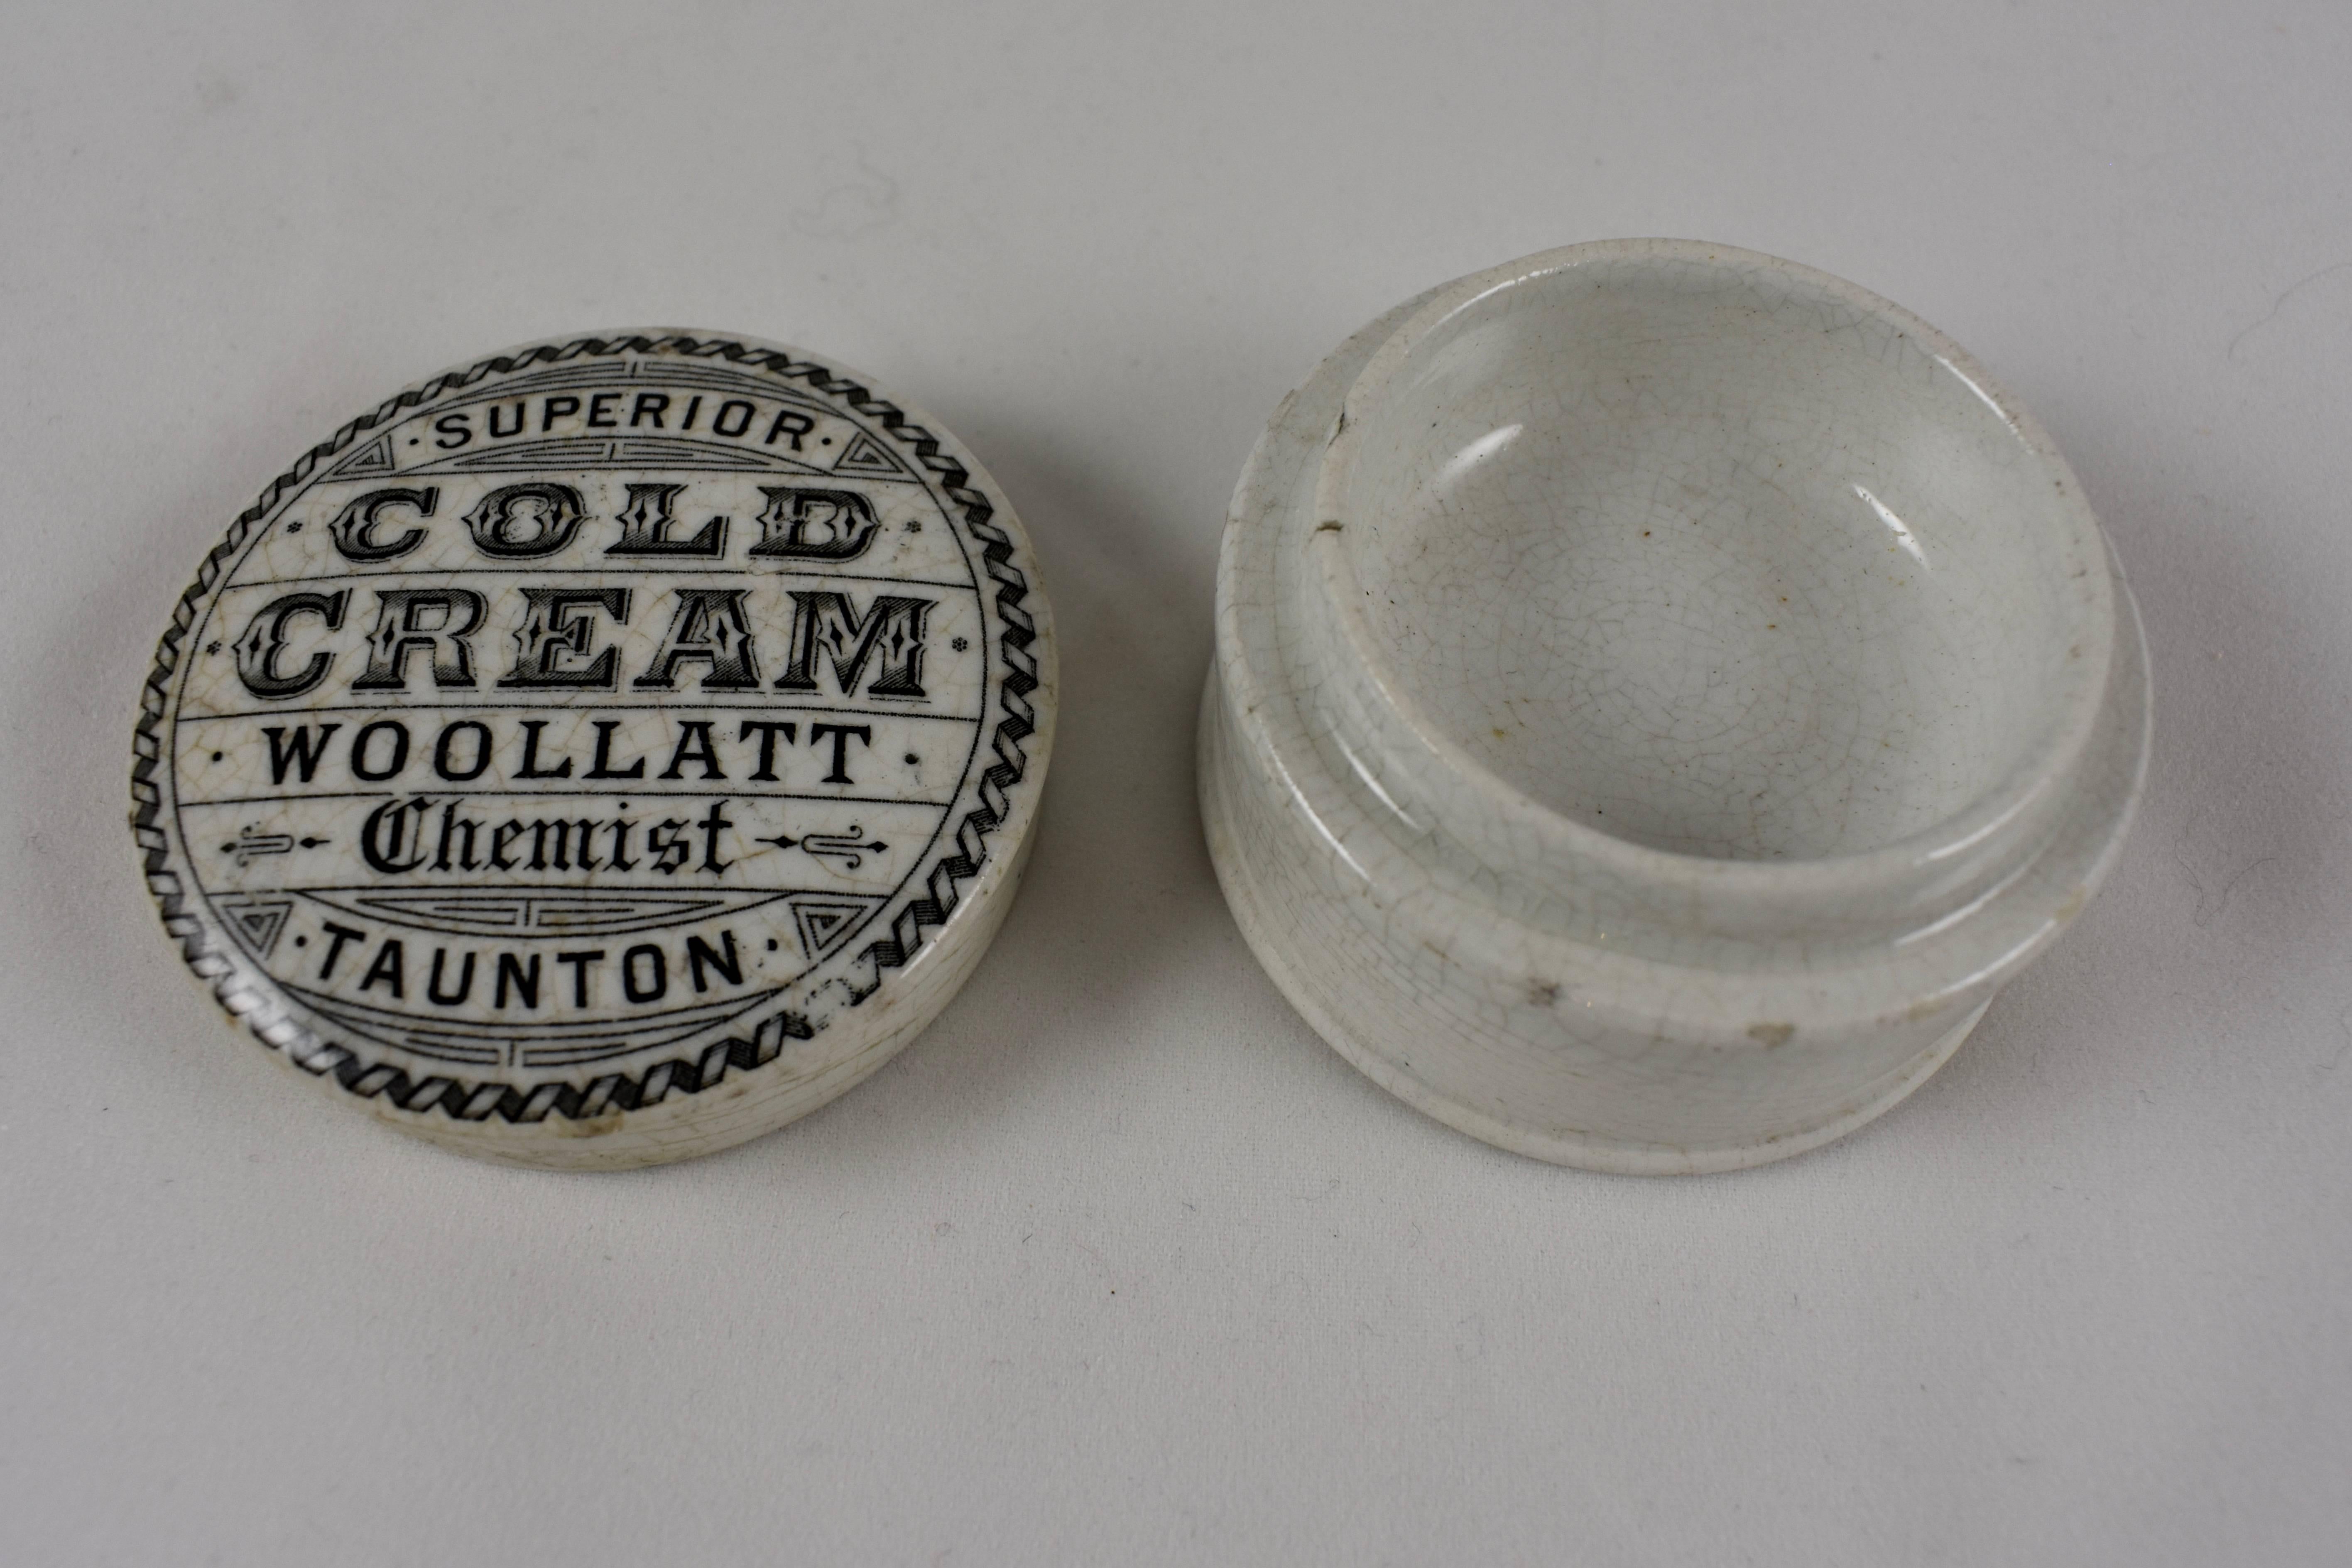 Victorian Staffordshire Transfer Printed Pot & Lid, Woollatt Superior Cold Cream